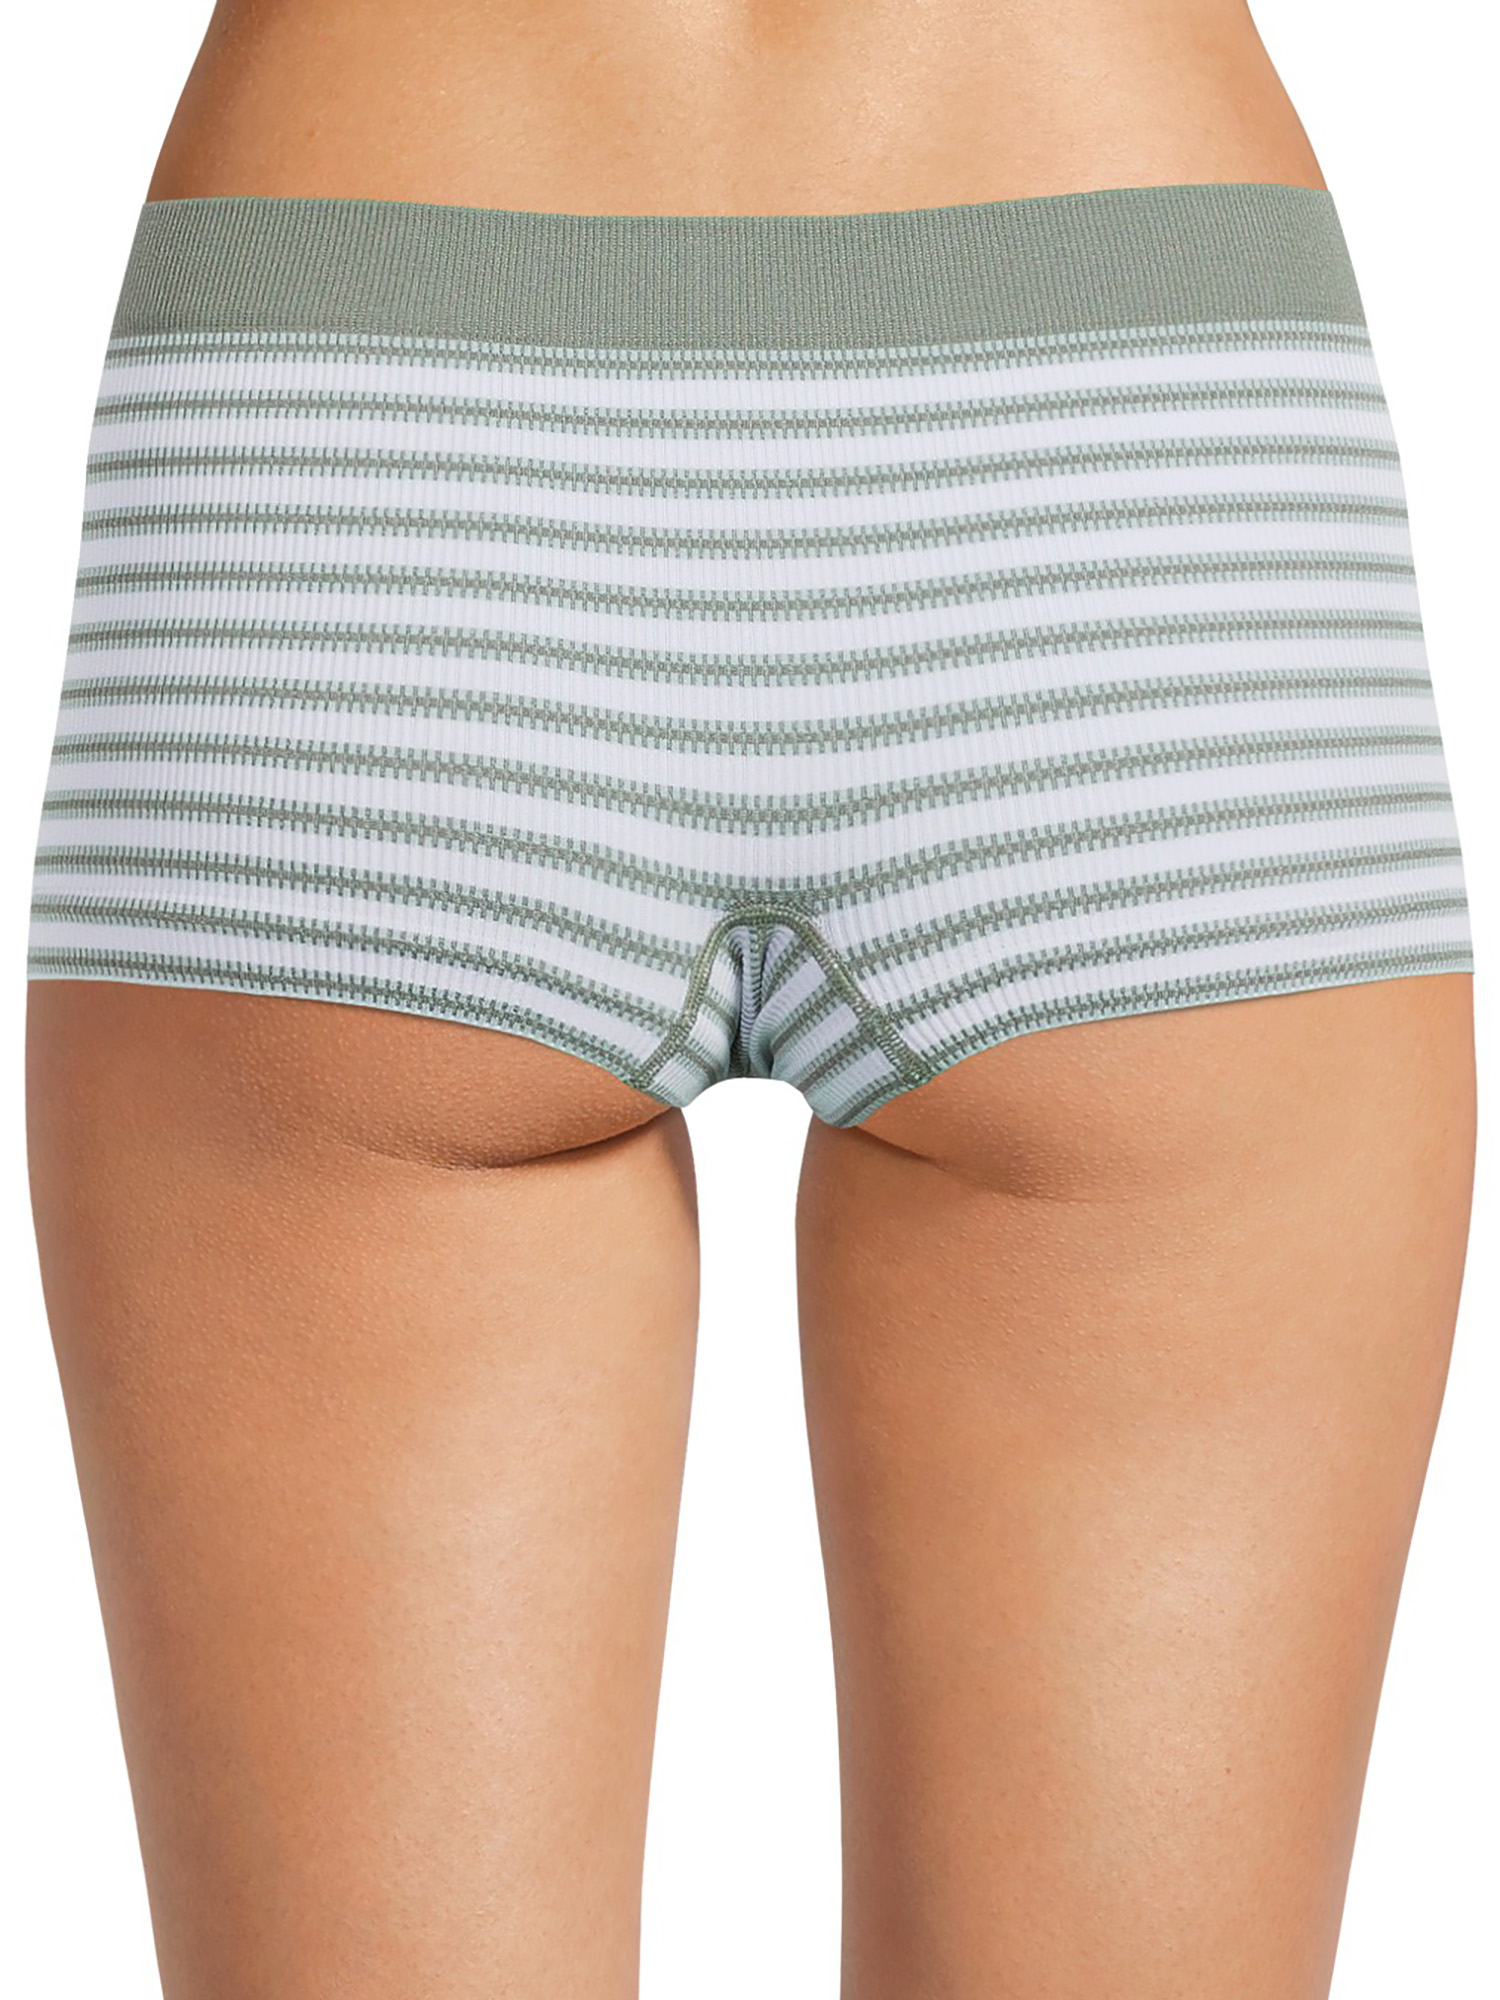 No Boundaries Women's Seamless Boyshort Panties, 2-Pack - image 2 of 3